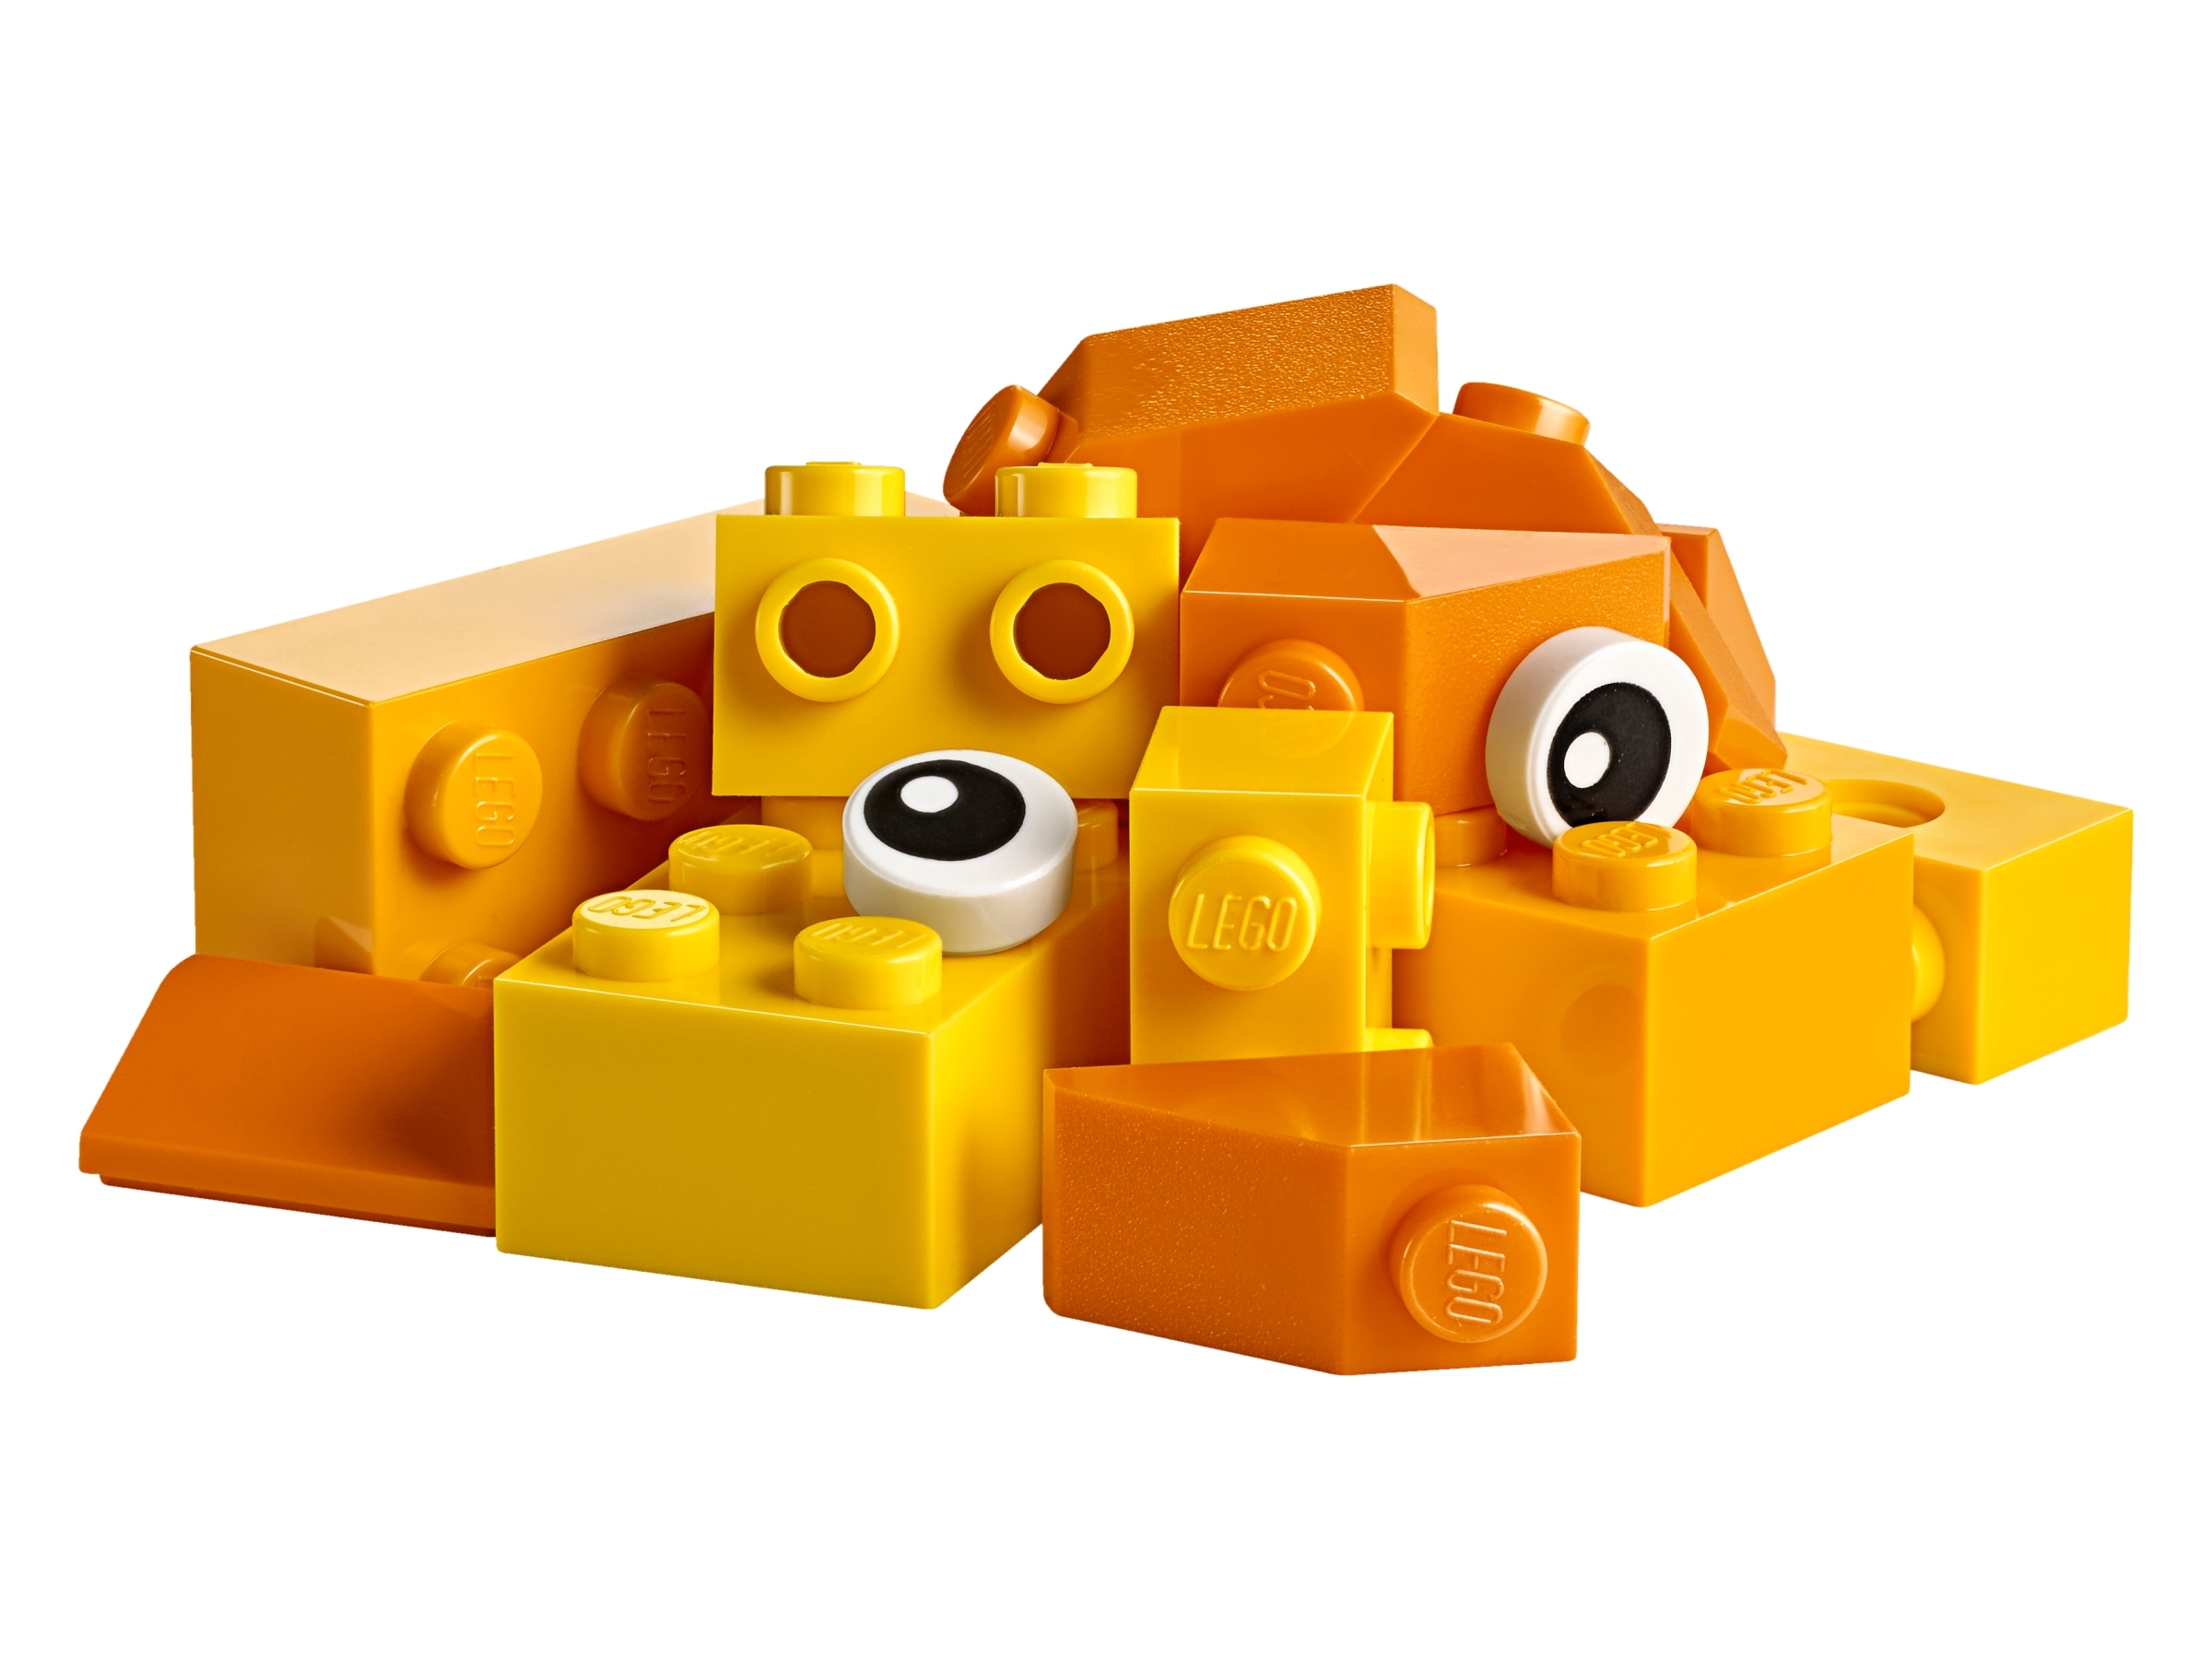  LEGO Classic Creative Suitcase 10713 - Includes